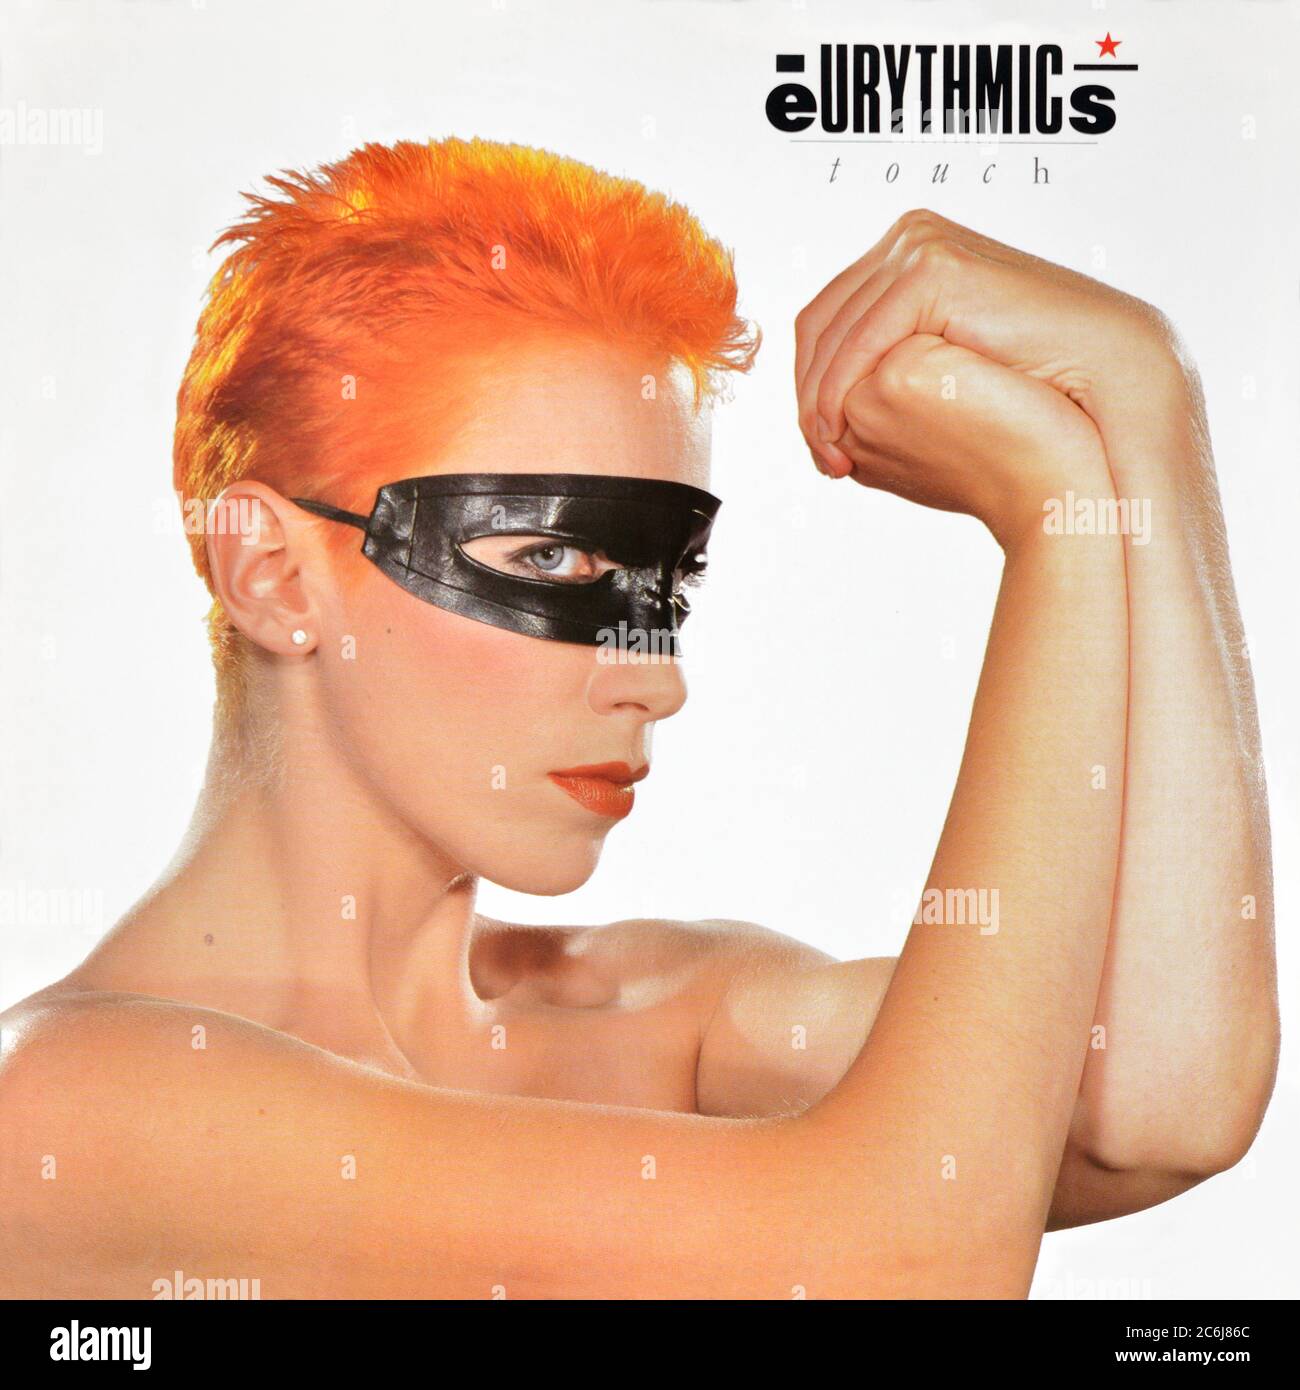 Eurythmics - copertina originale in vinile - Touch - 1983 Foto Stock